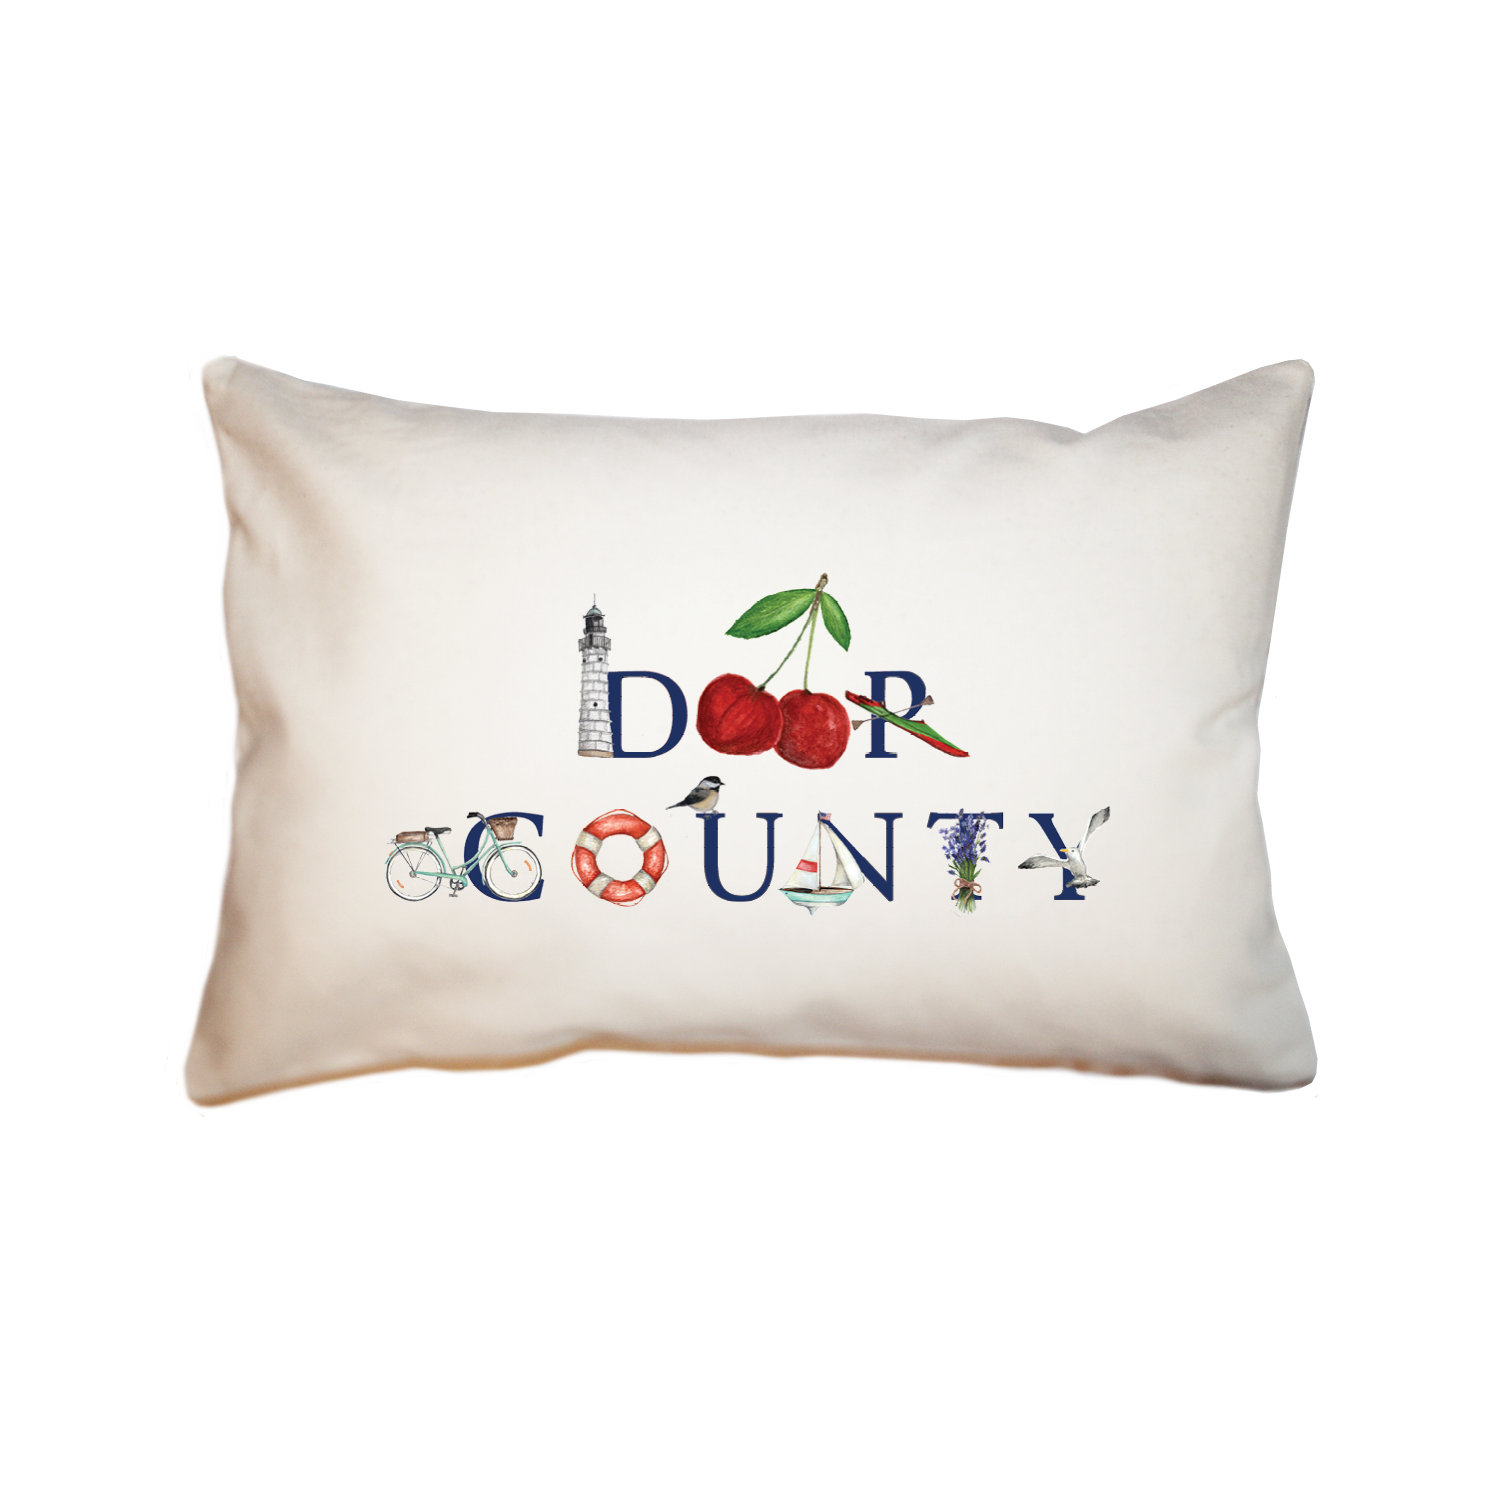 Door County large rectangle pillow